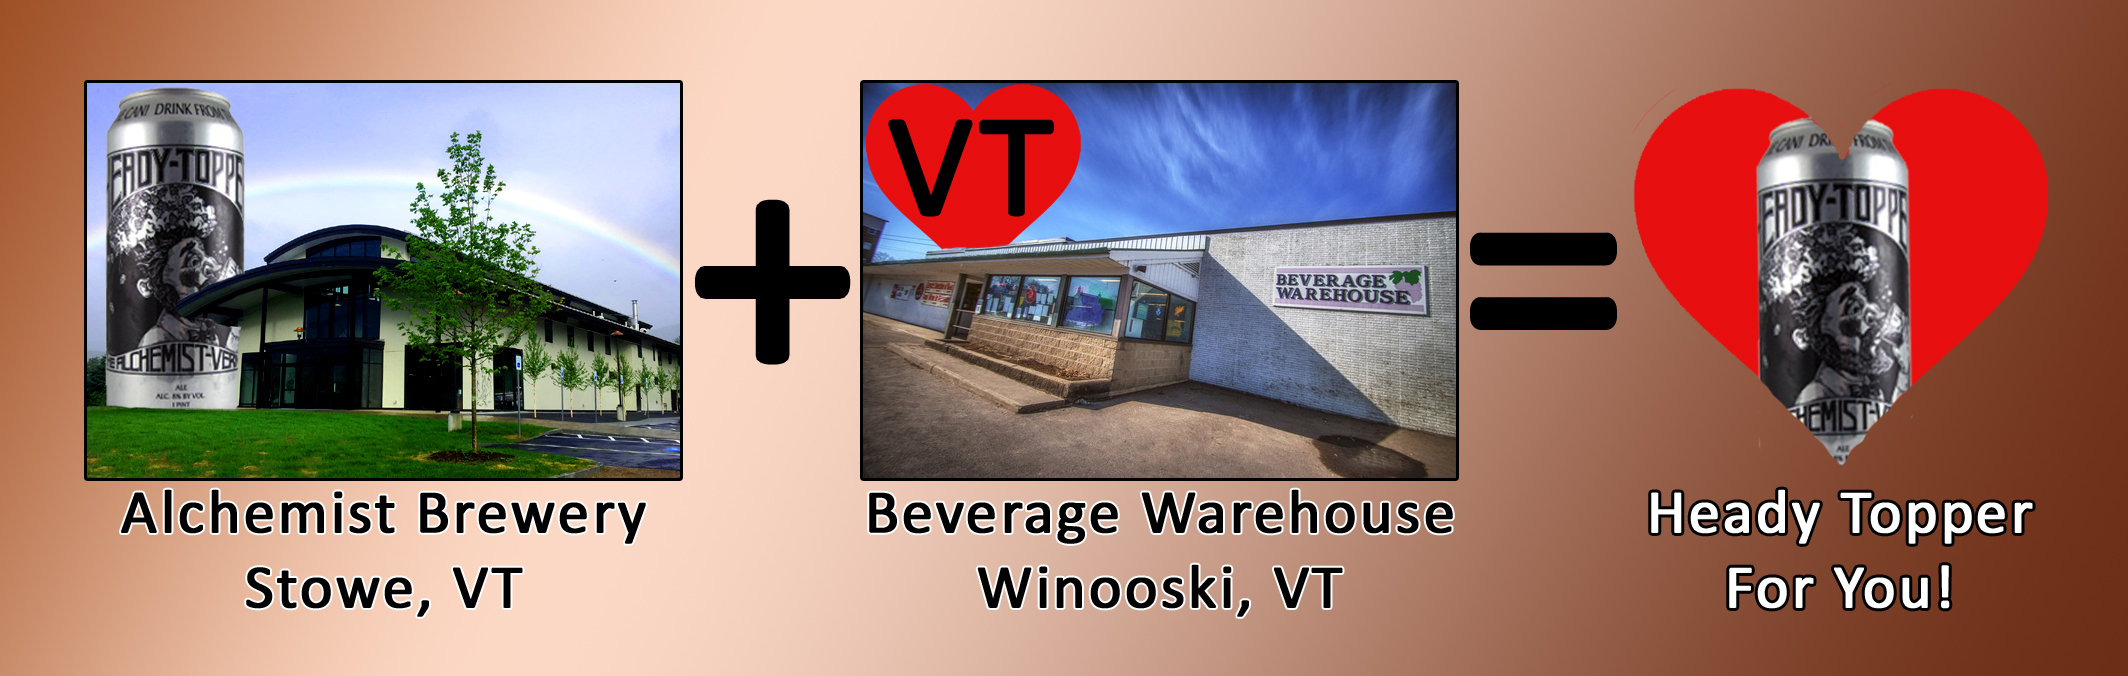 heady topper beverage warehouse v2